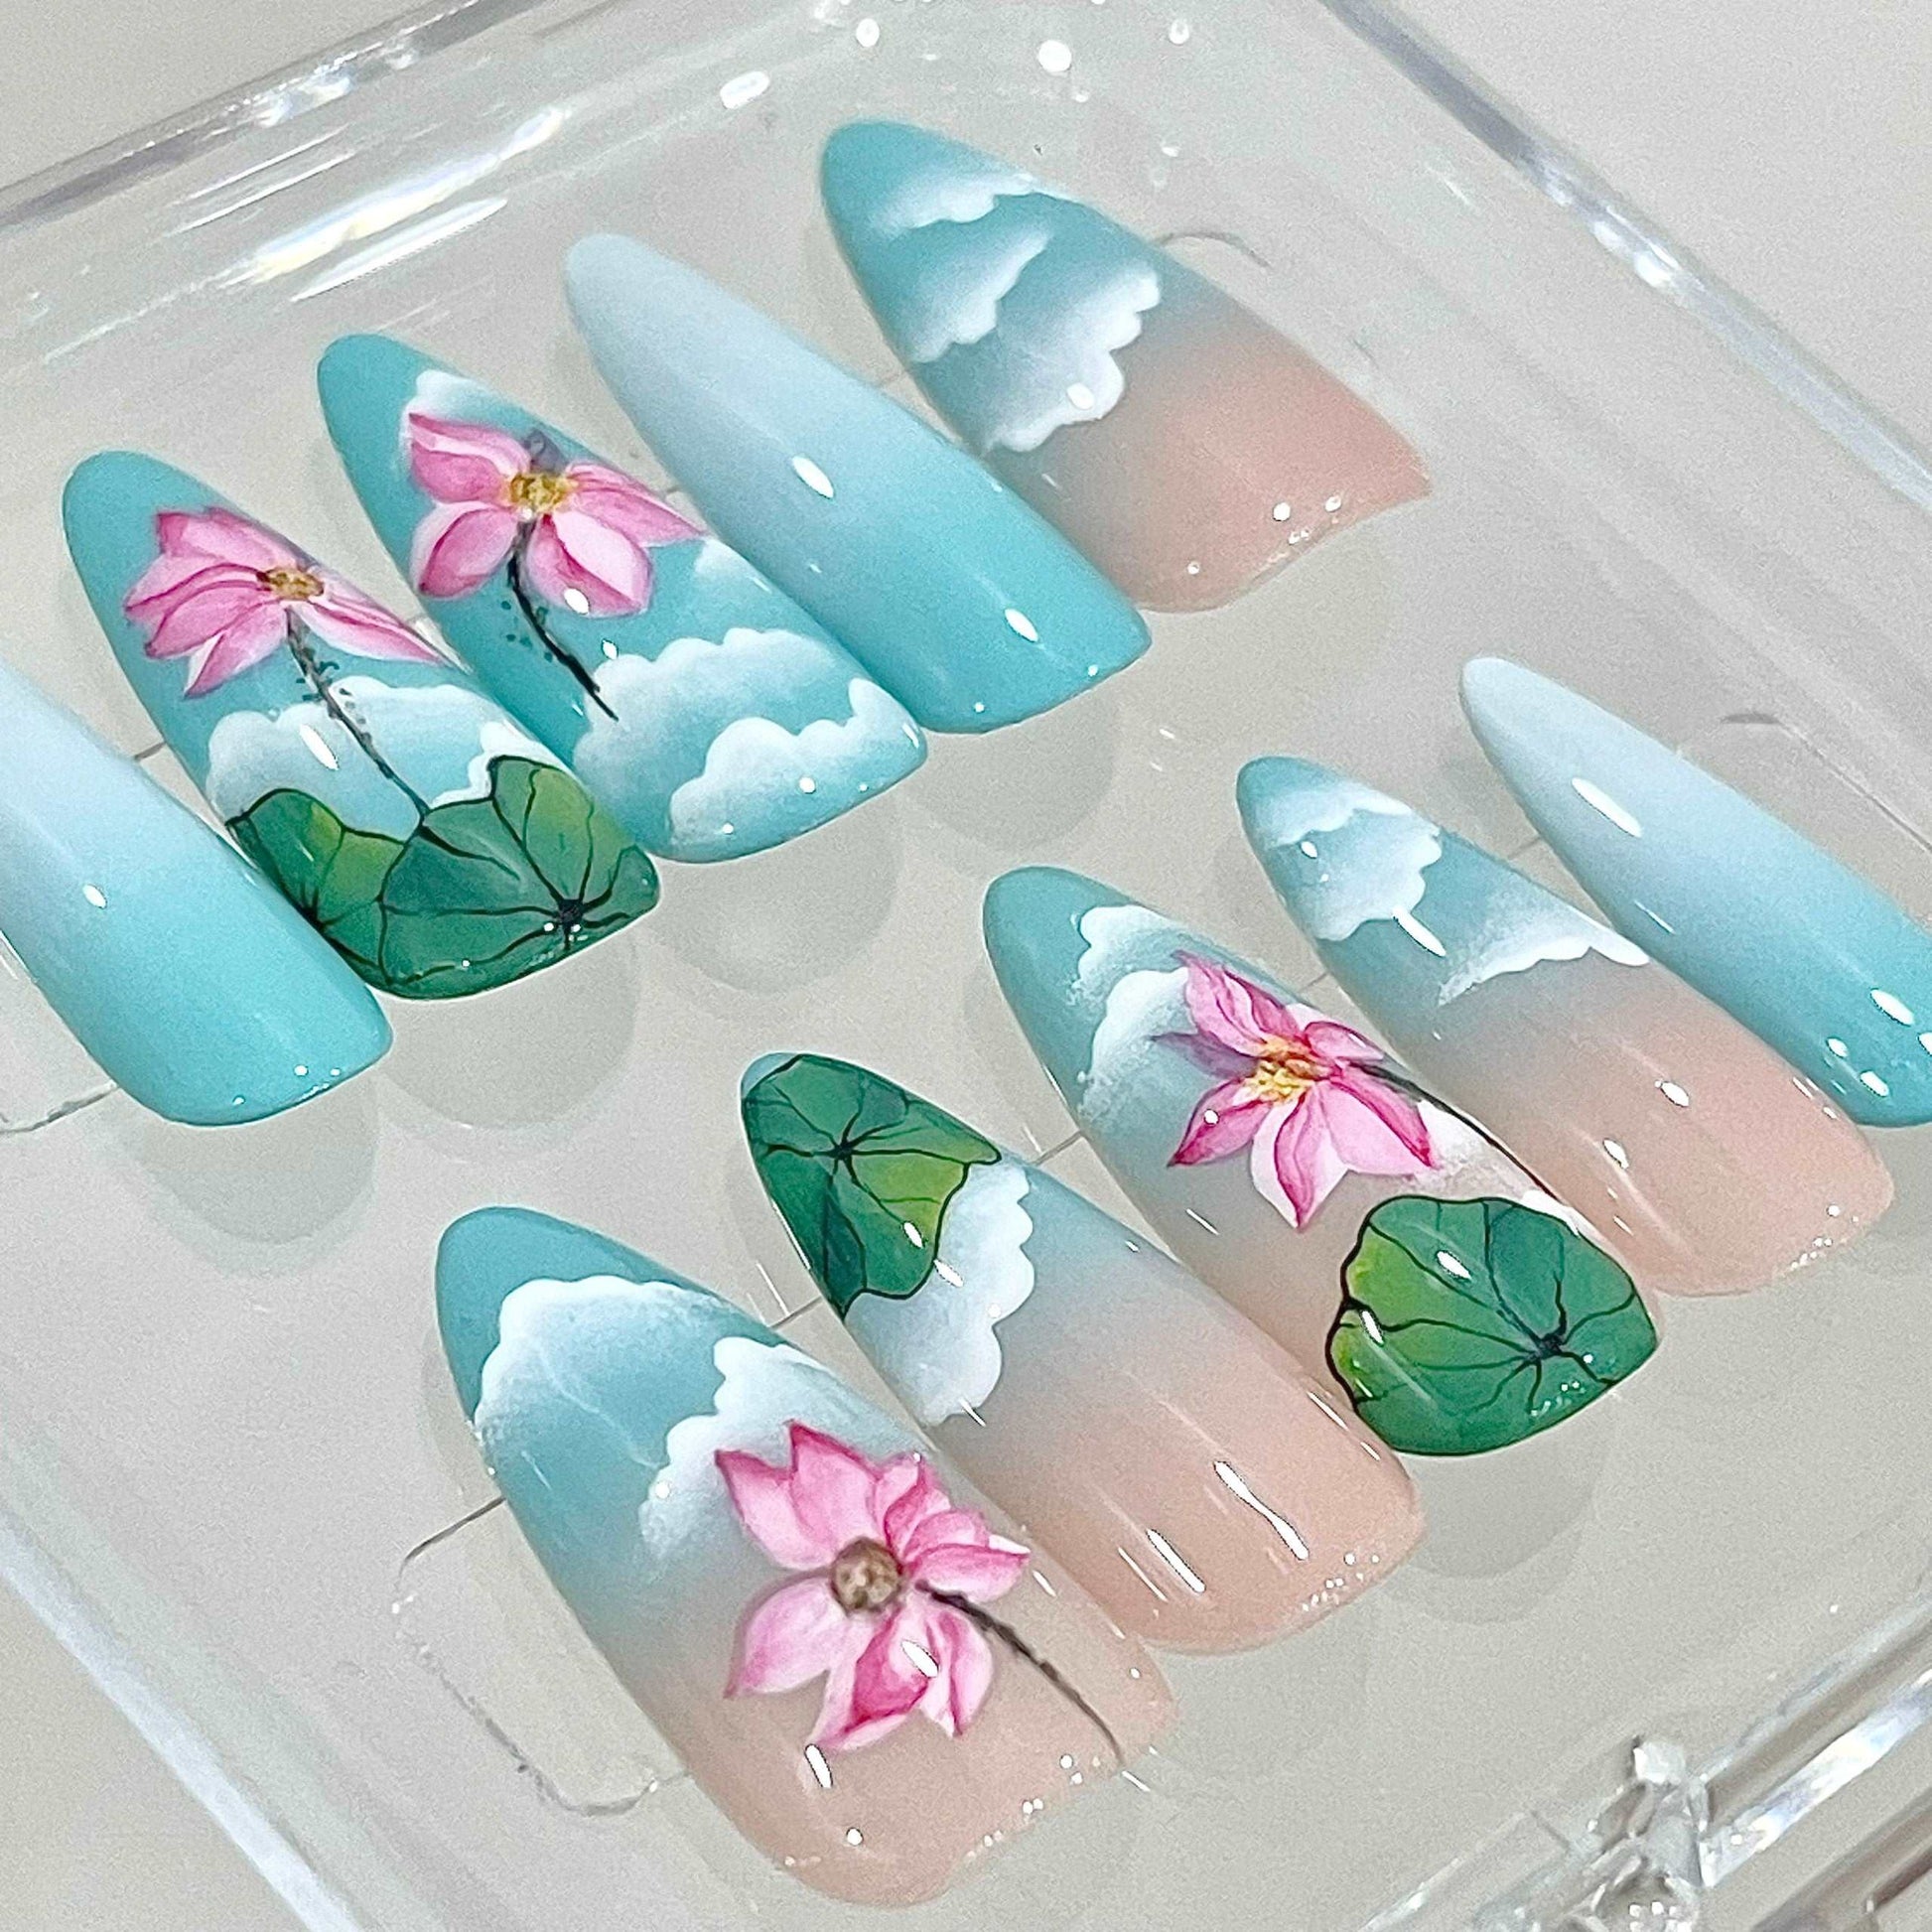 Handmade Spring Lotus Press On Nails - Cloud Blue & White Design.